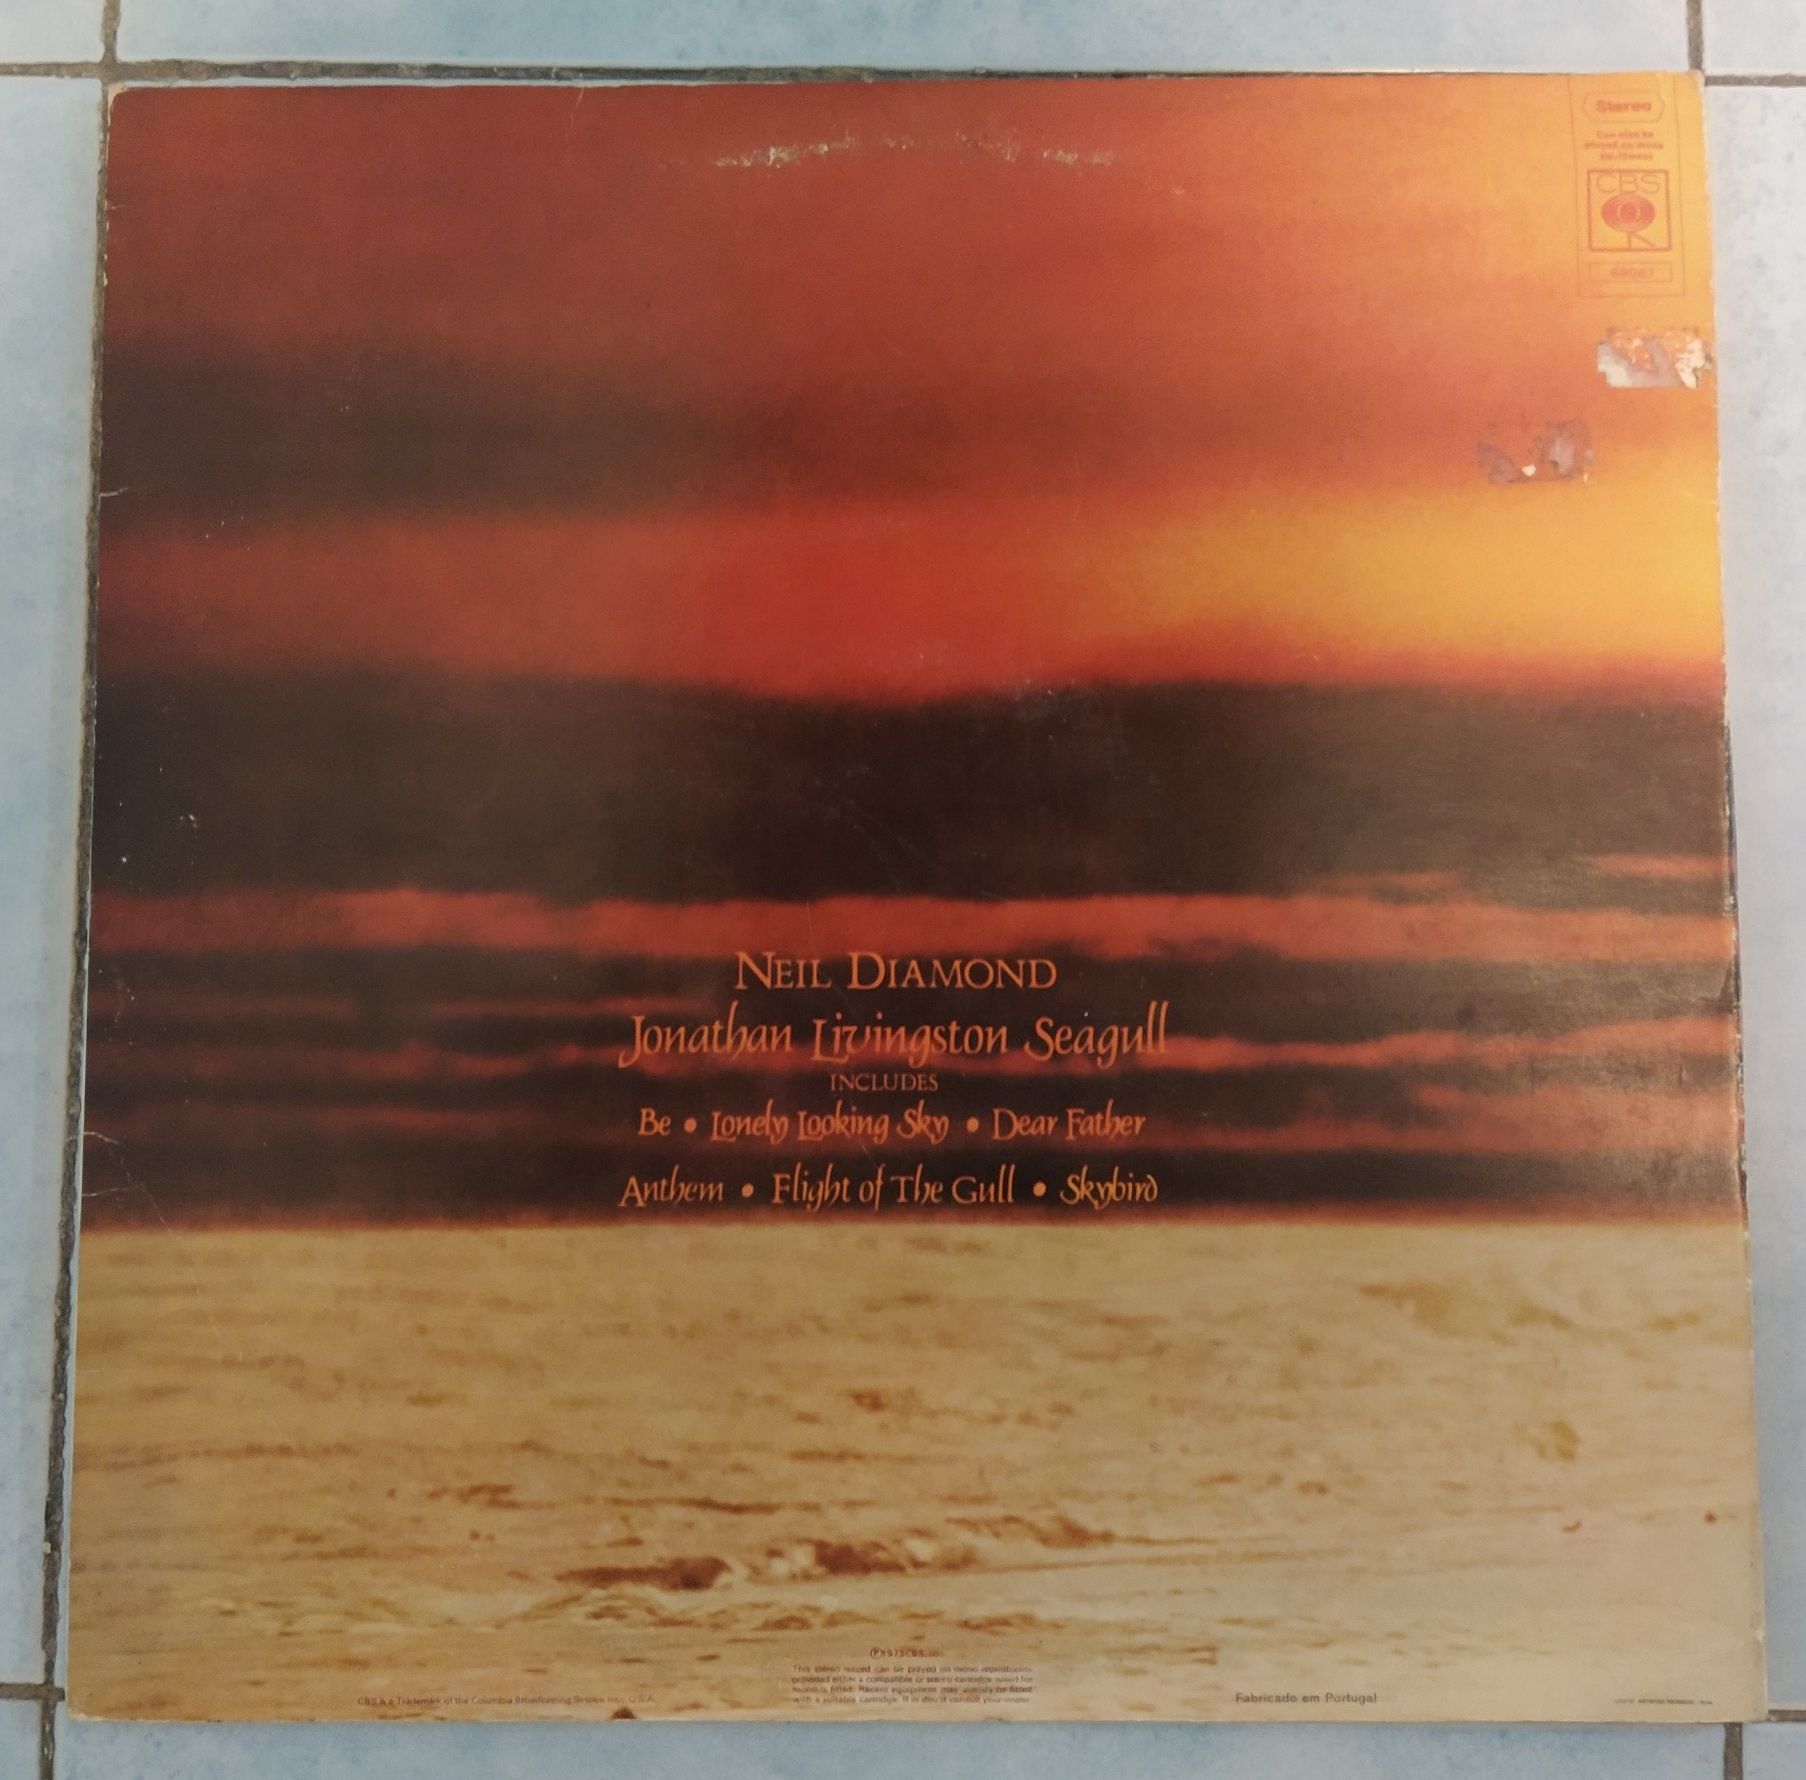 Disco Vinil LP: Neil Diamond - "Jonathan Livingston Seagull"